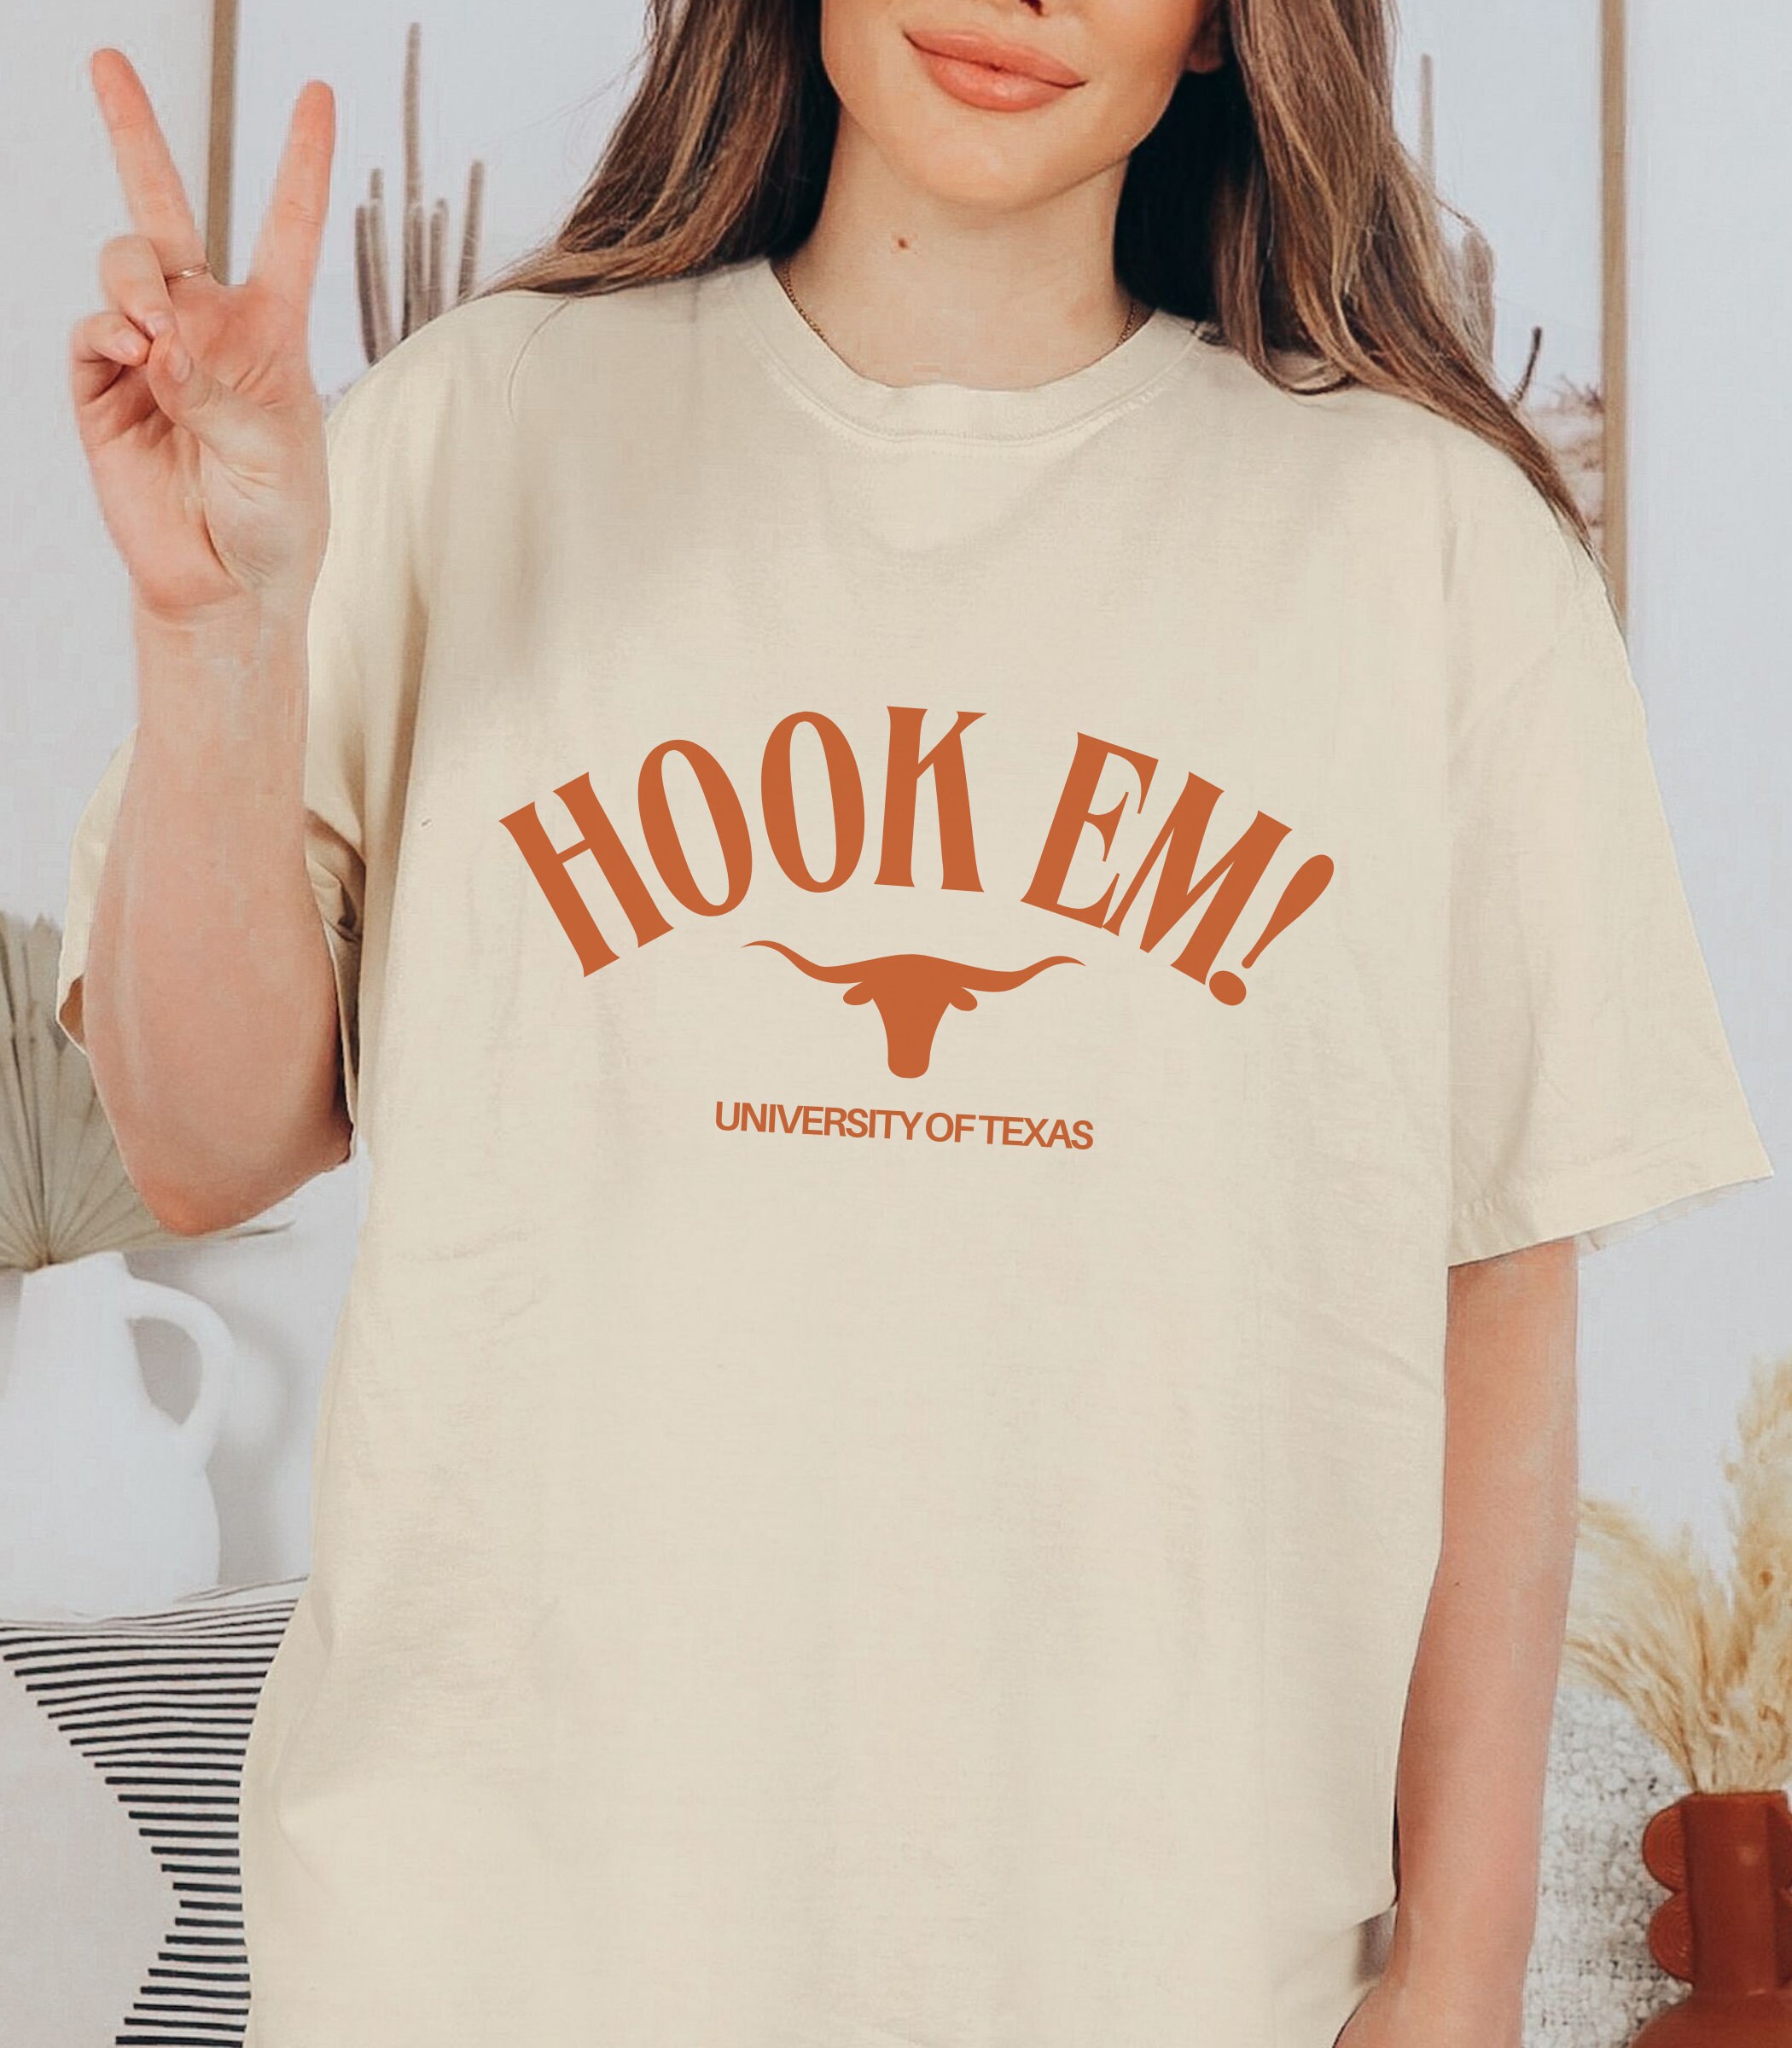 Hook Em University of Texas Unisex Comfort Colors T-shirt, UT Austin,  Longhorns Football, Vintage Retro College Football Tee, Orange 